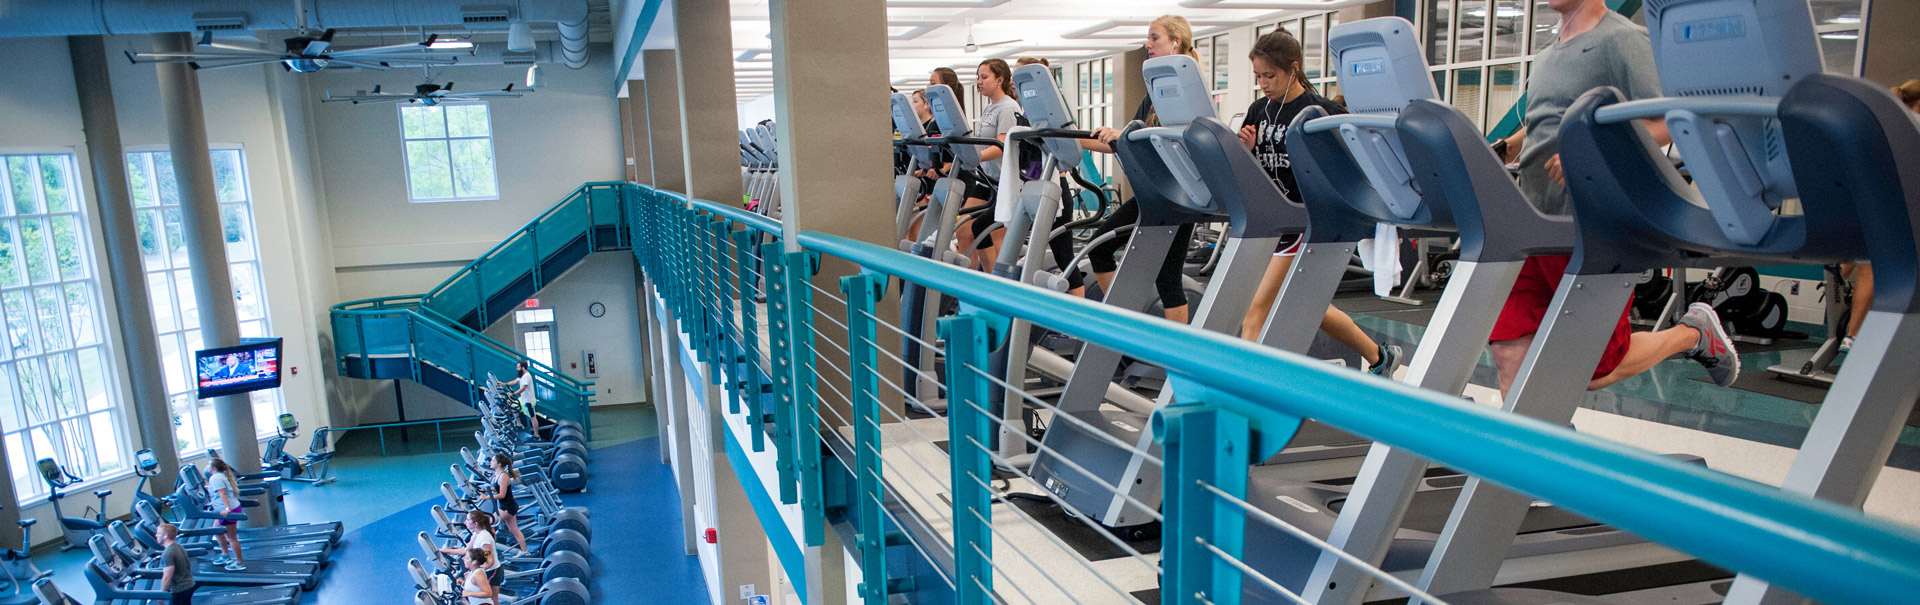 Image of people running on treadmills